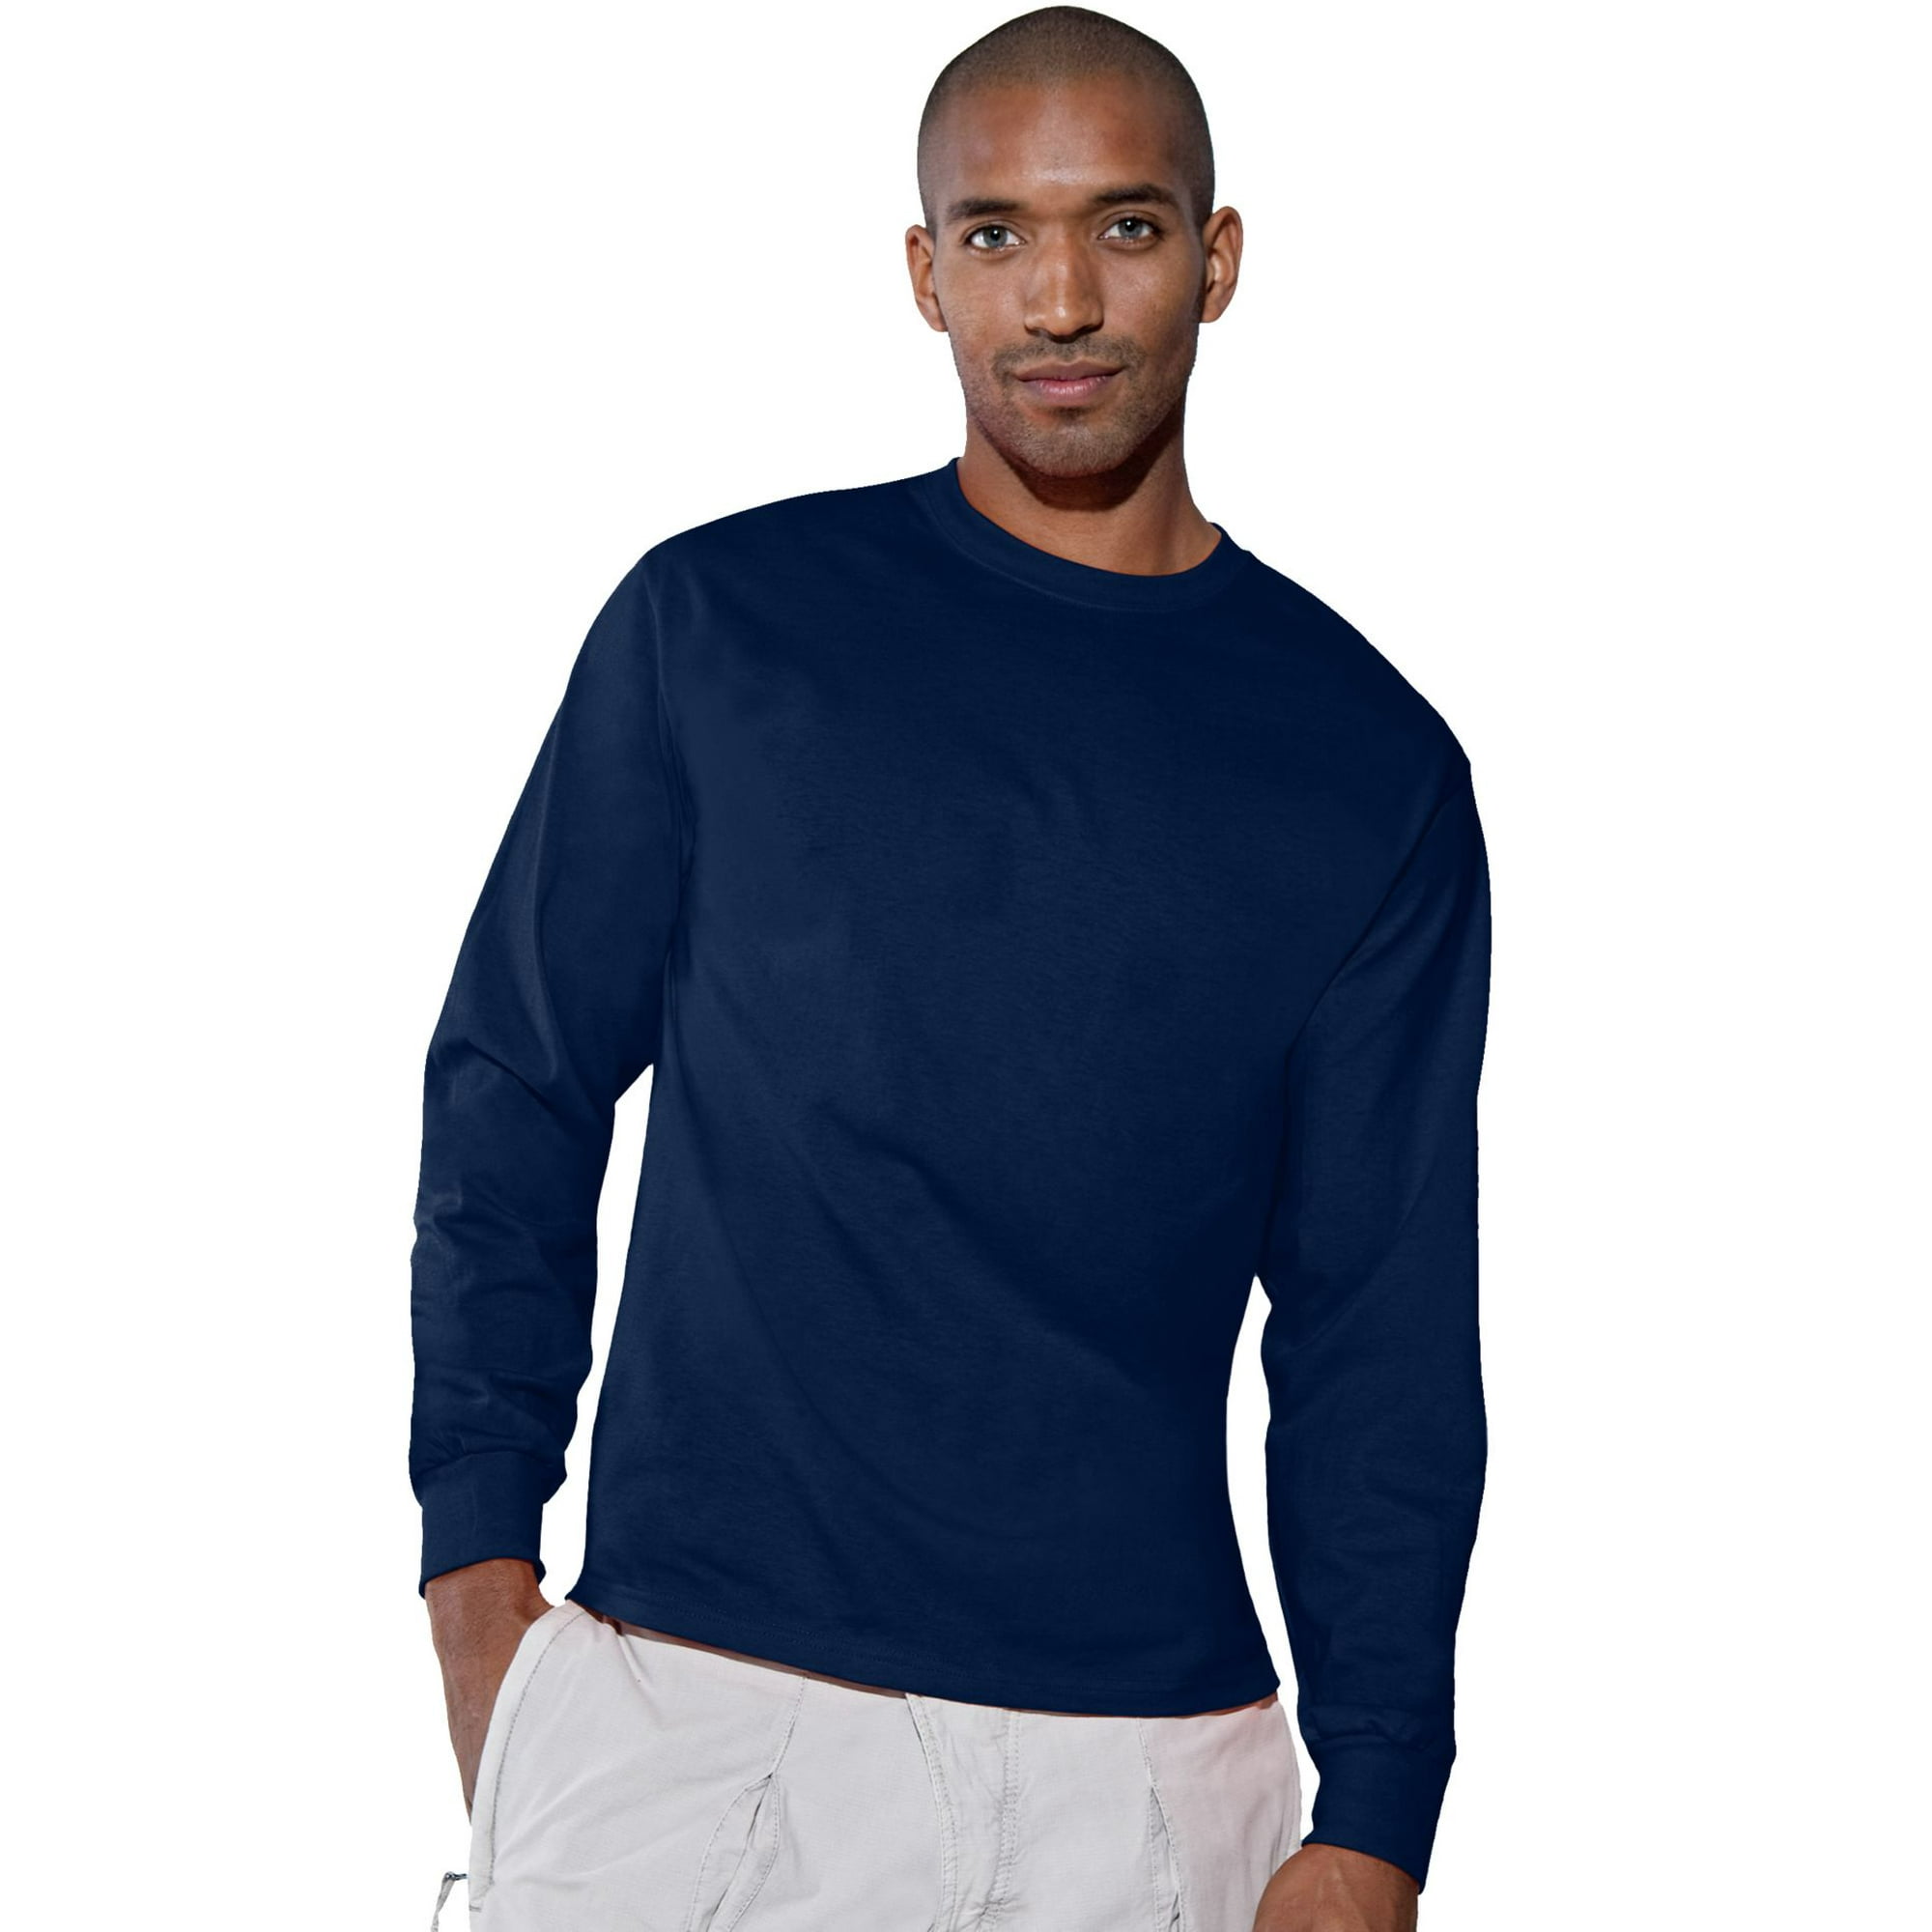 Hanes Crewneck Long Sleeve fashion t shirts - Walmart.com